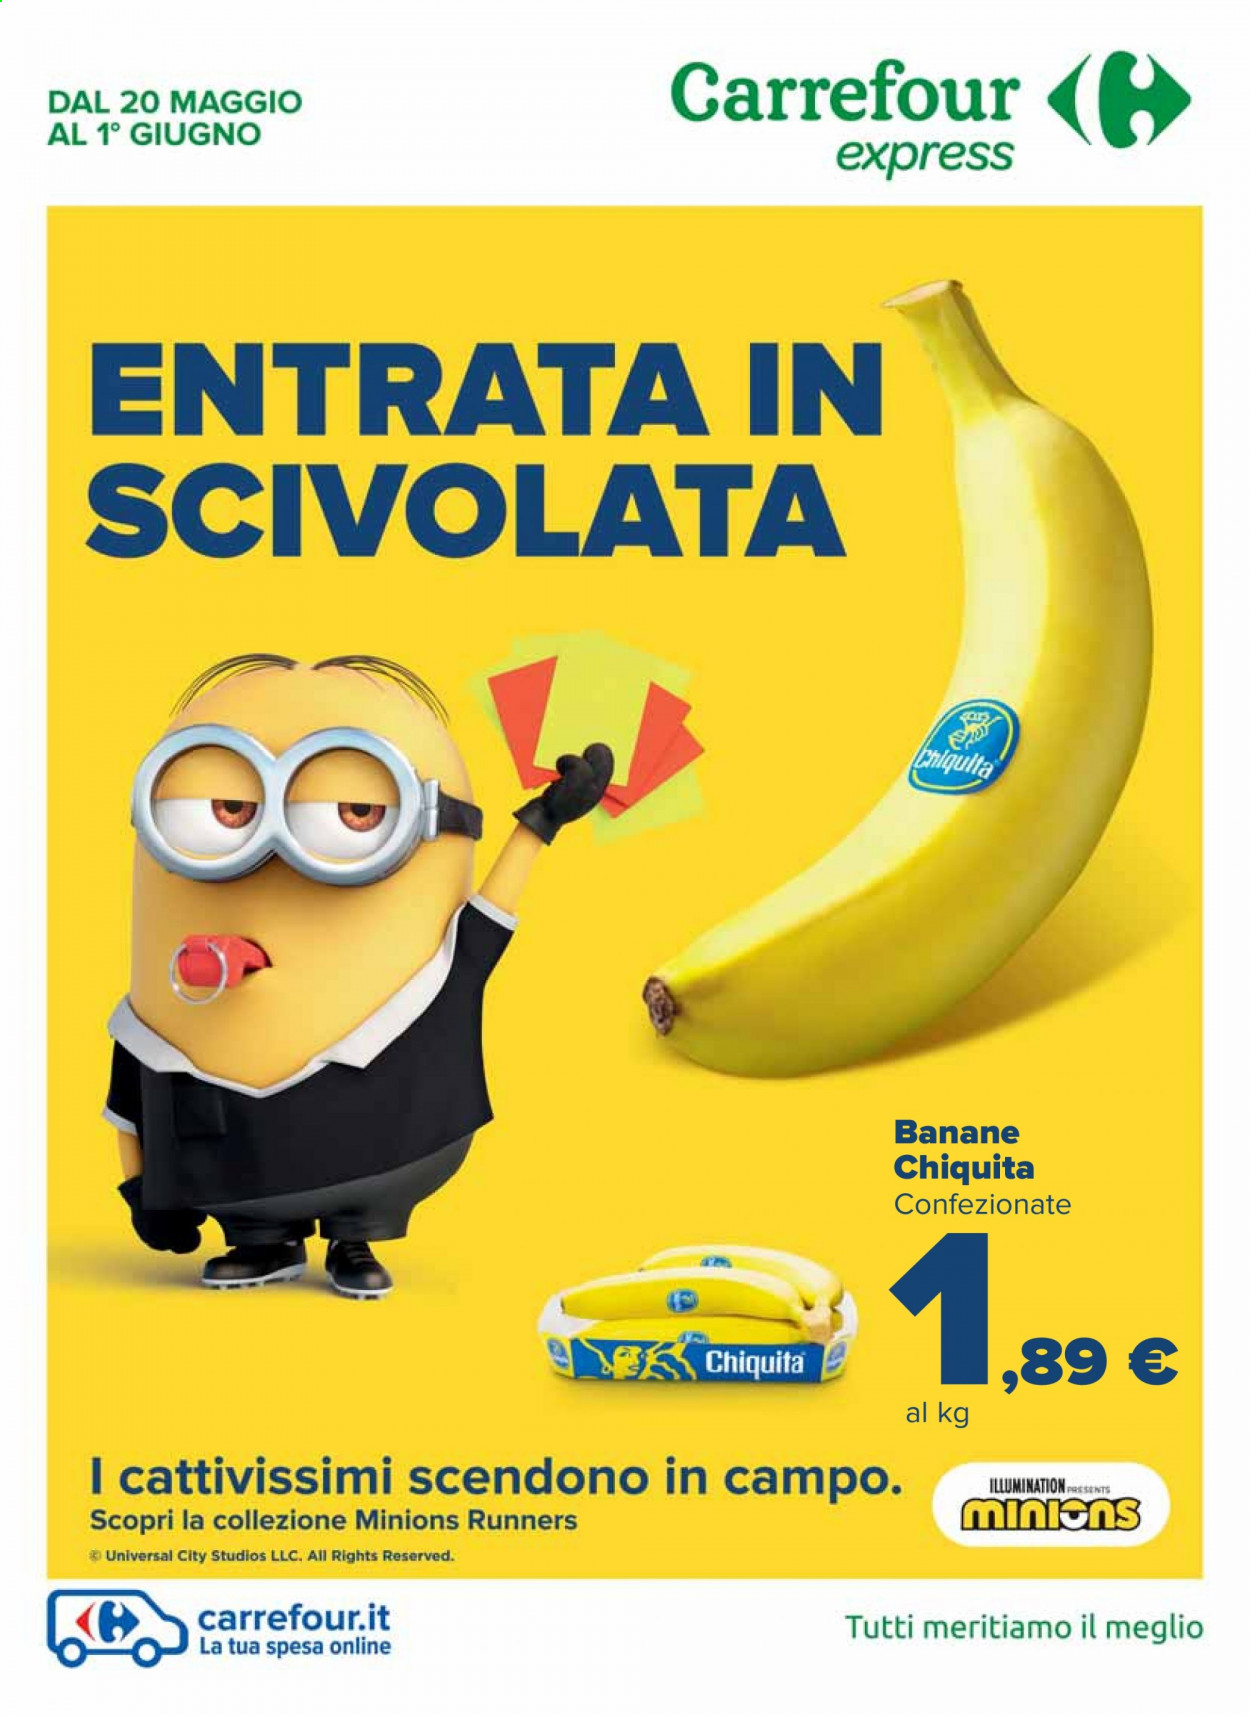 thumbnail - Volantino Carrefour - 20/5/2021 - 1/6/2021 - Prodotti in offerta - Minions, banane, Chiquita. Pagina 1.